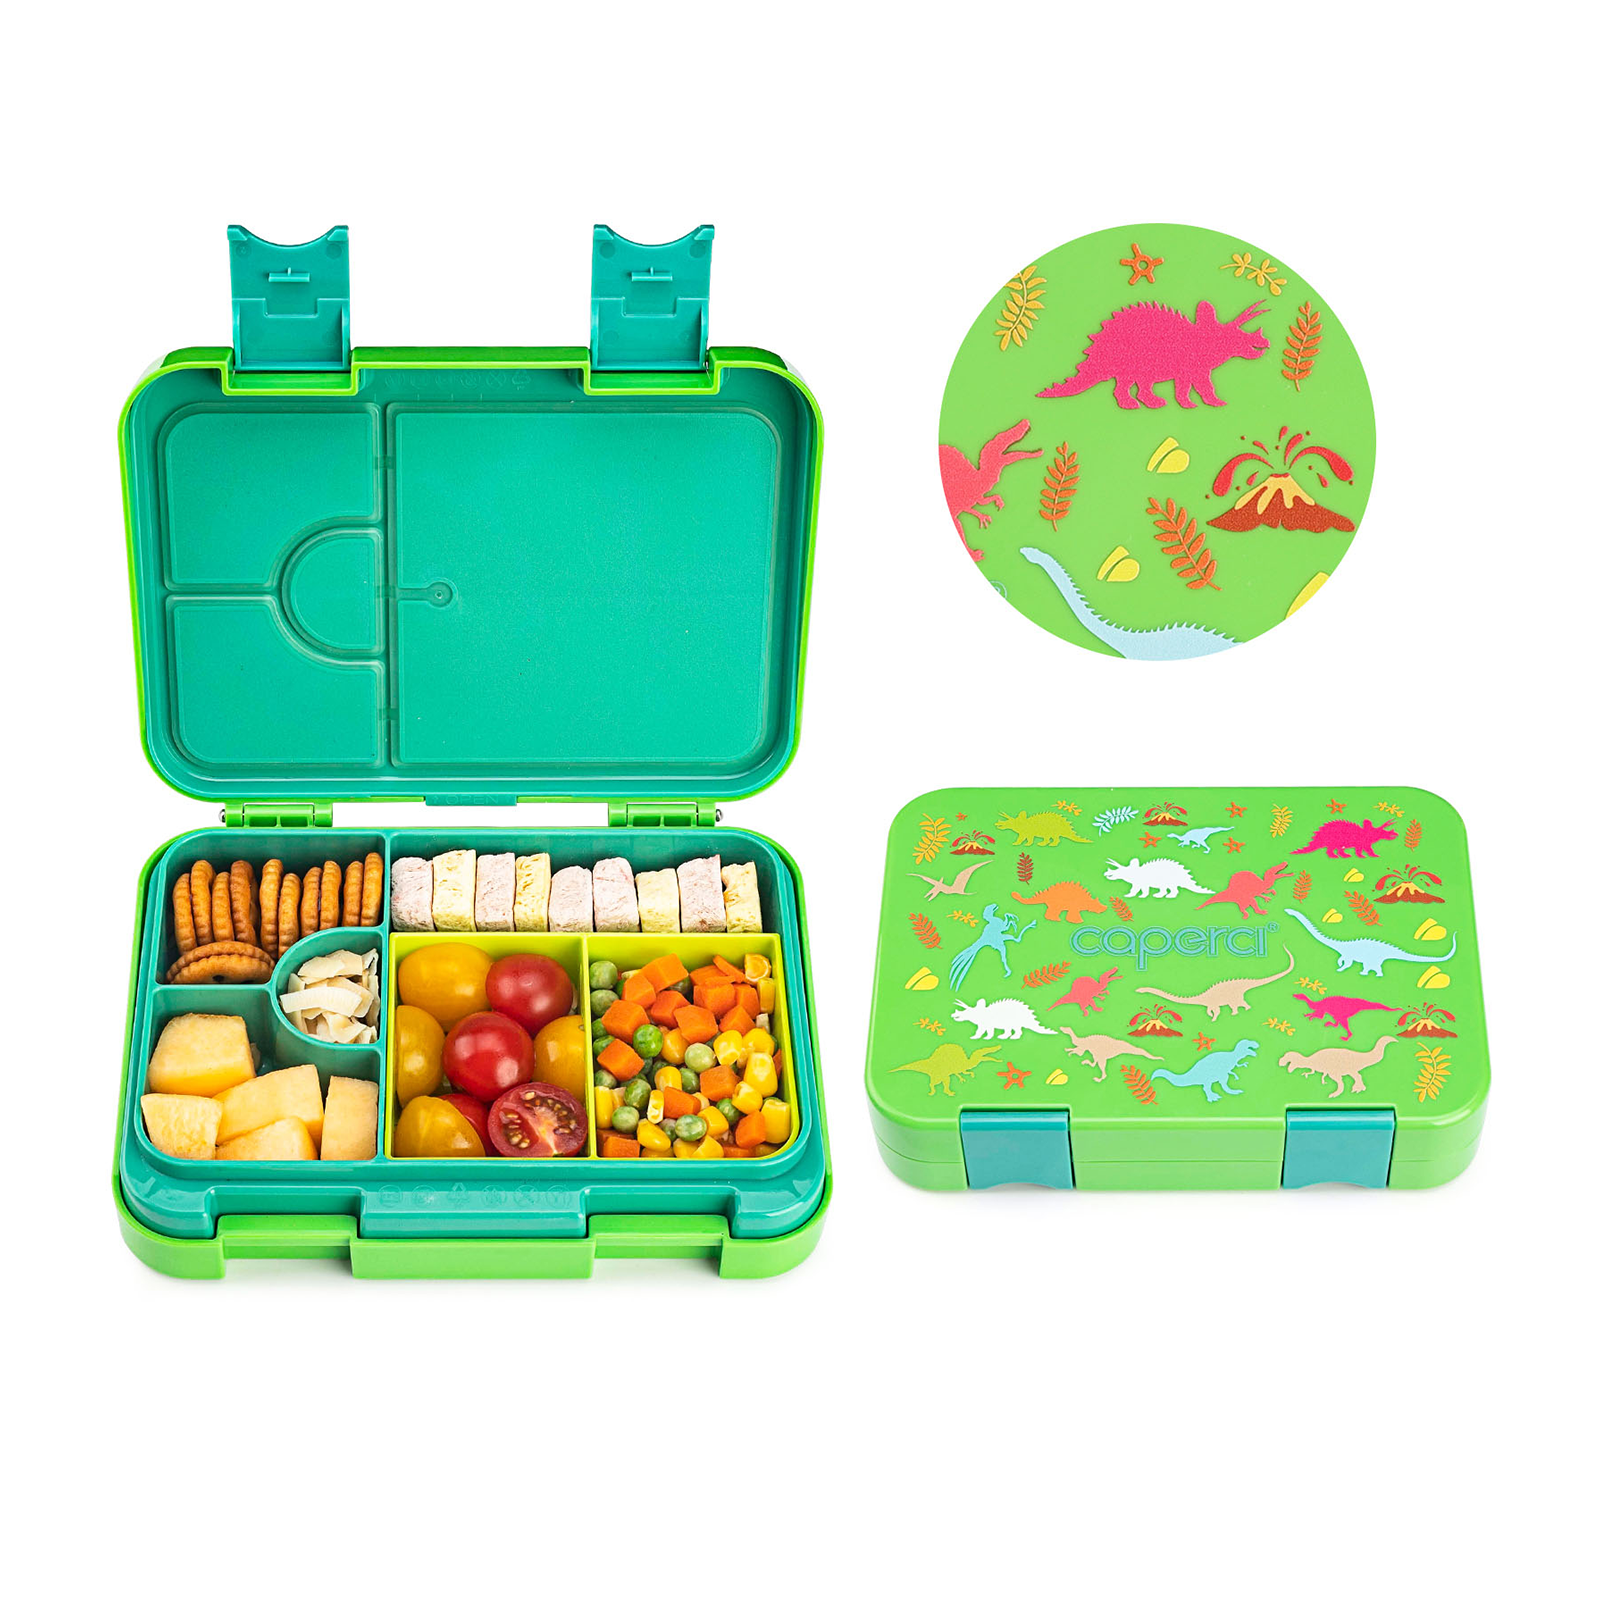 Caperci Dinosaur Bento Lunch Box for Kids